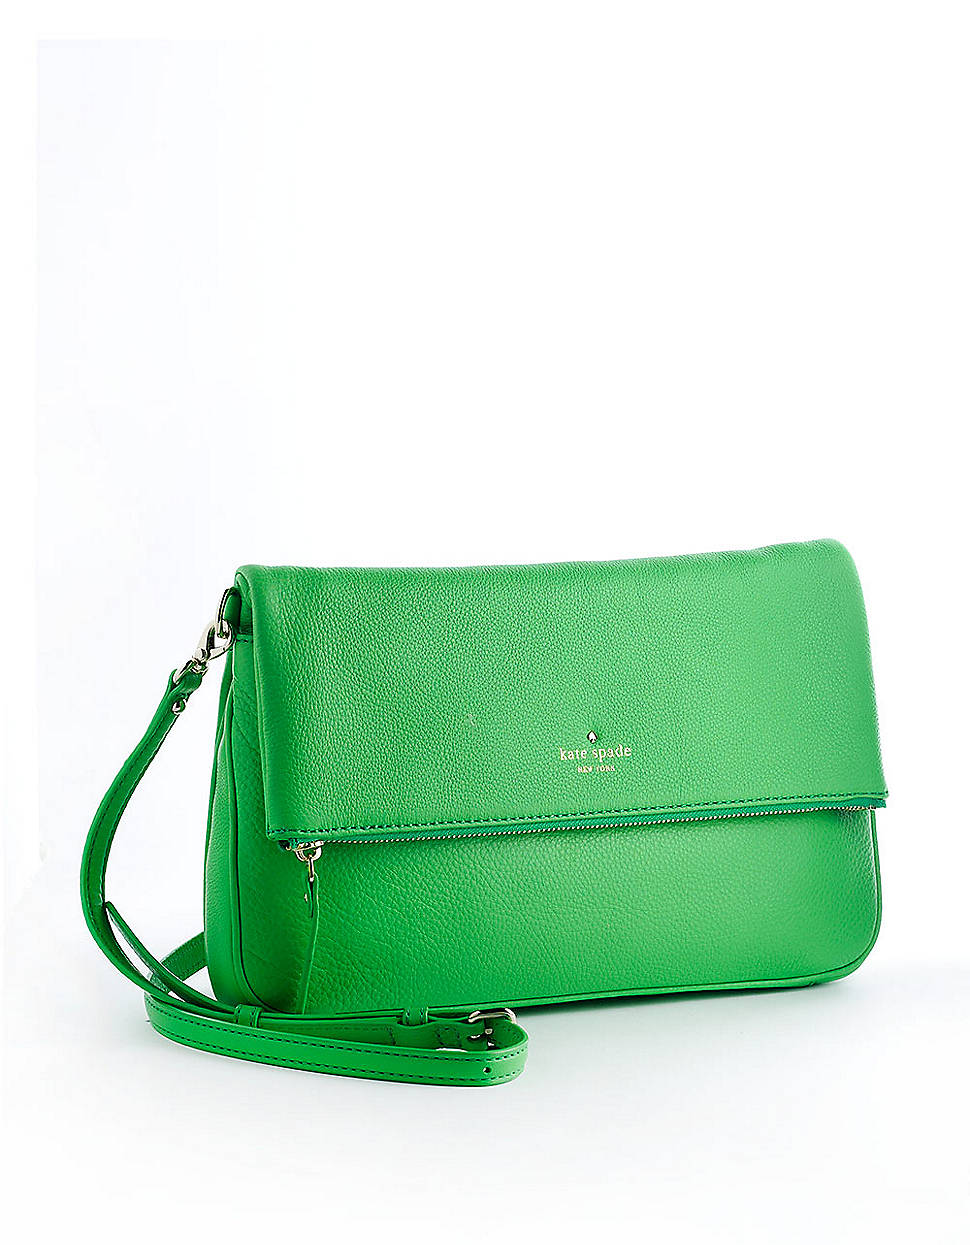 Kate Spade Clarke Leather Messenger Bag in Green - Lyst